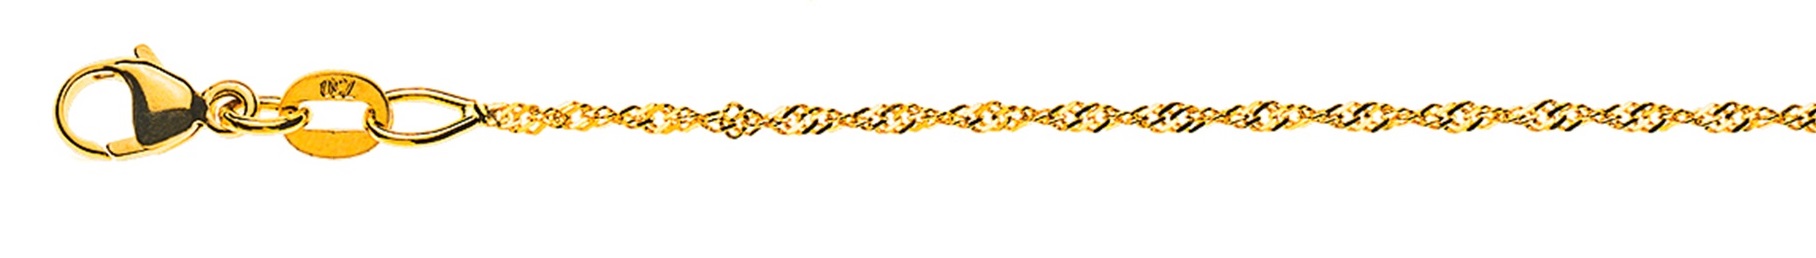 AURONOS Style Necklace Yellow Gold 9K Singapore Chain 50cm 1.2mm